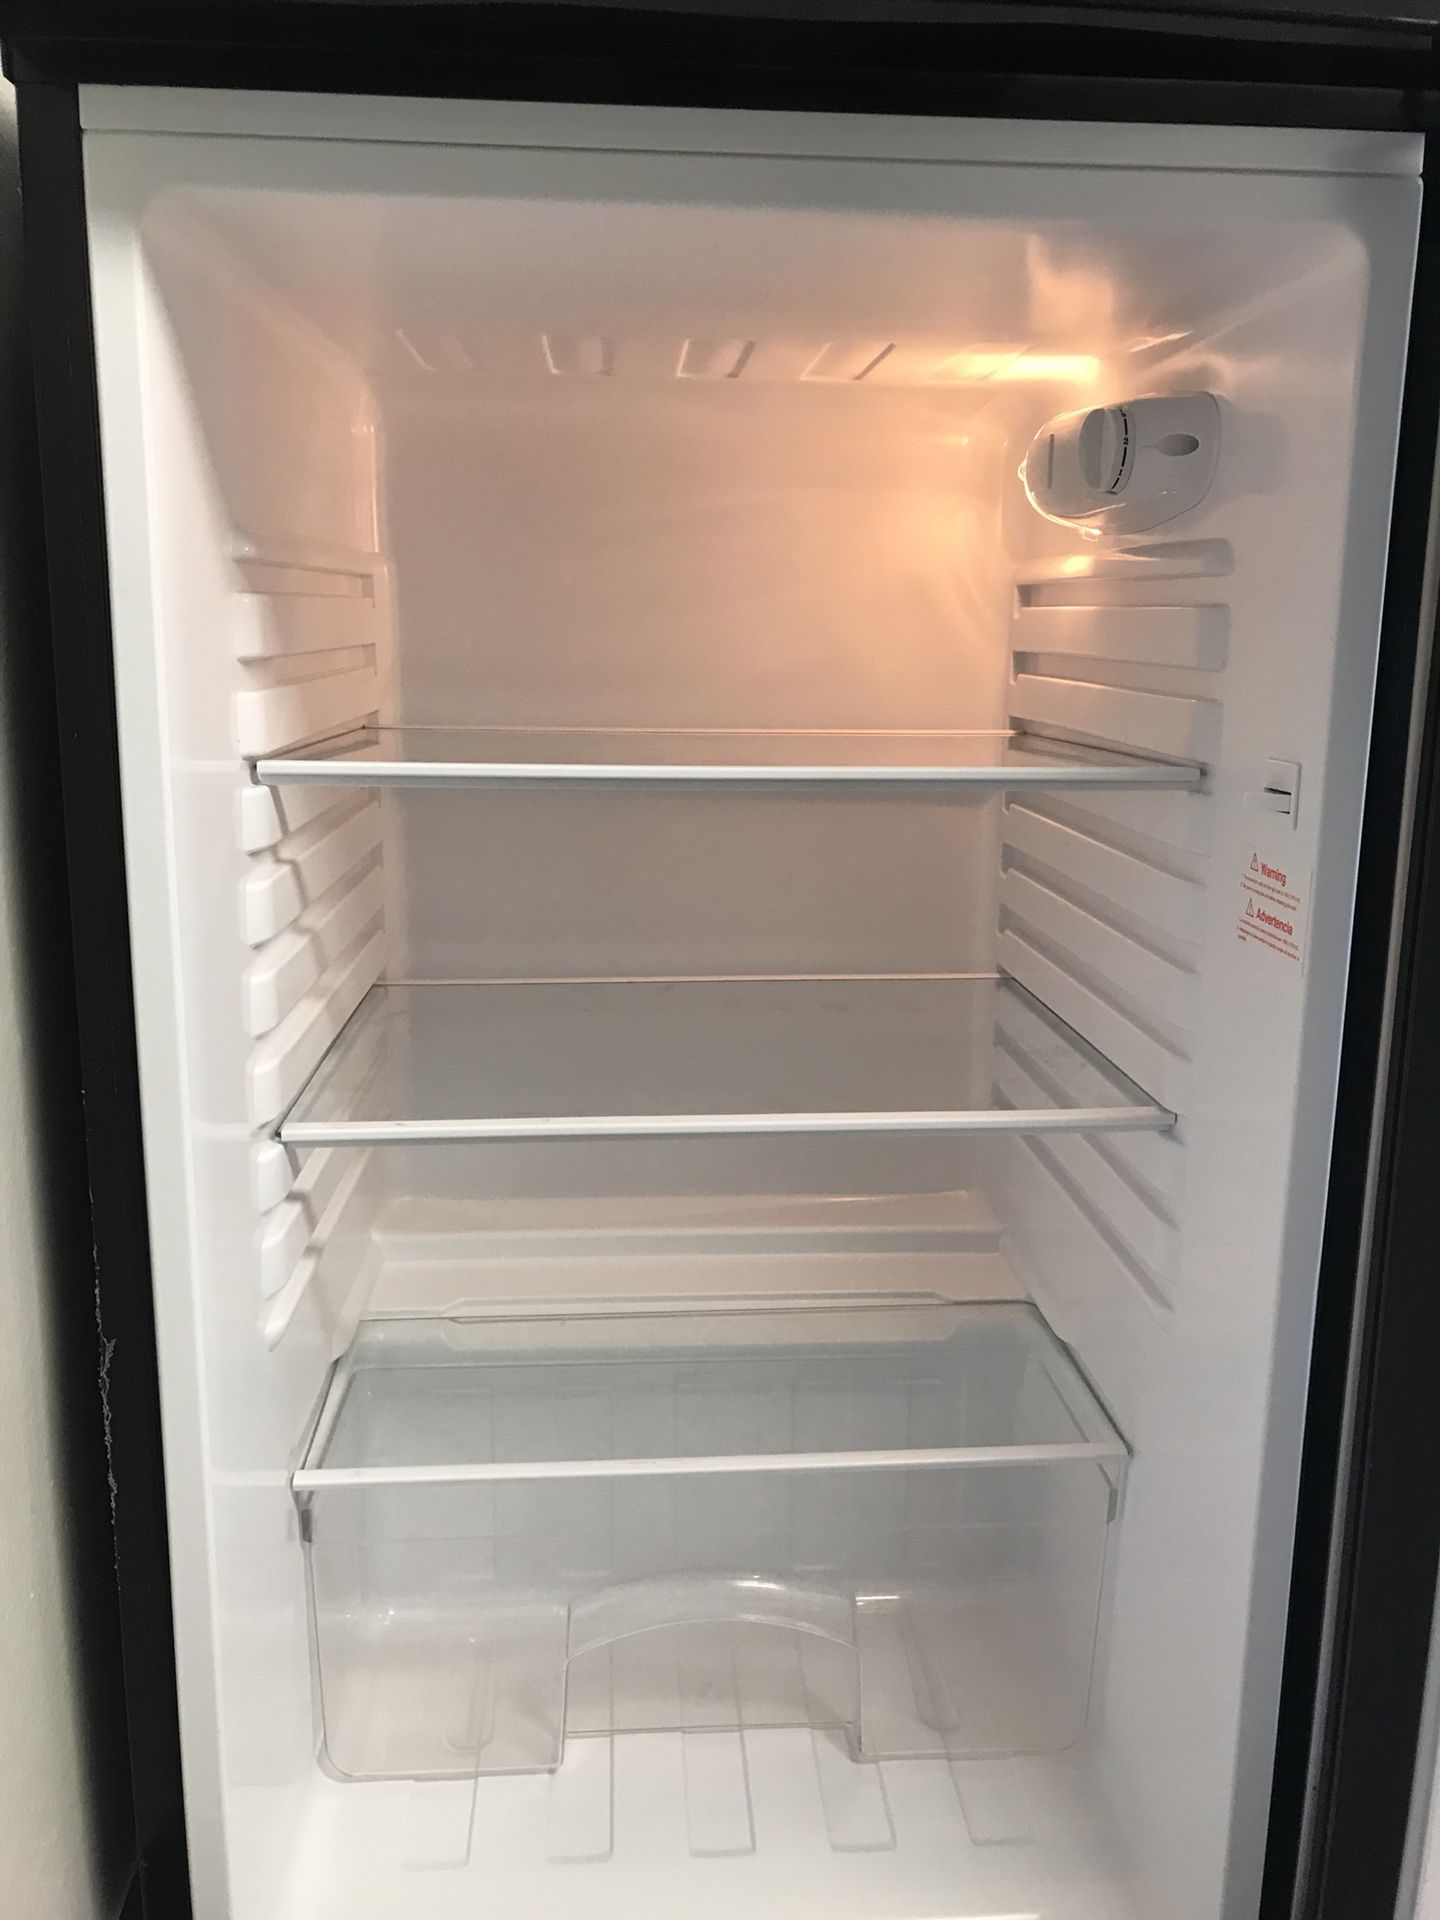 Small size refrigerator mini refrigerator